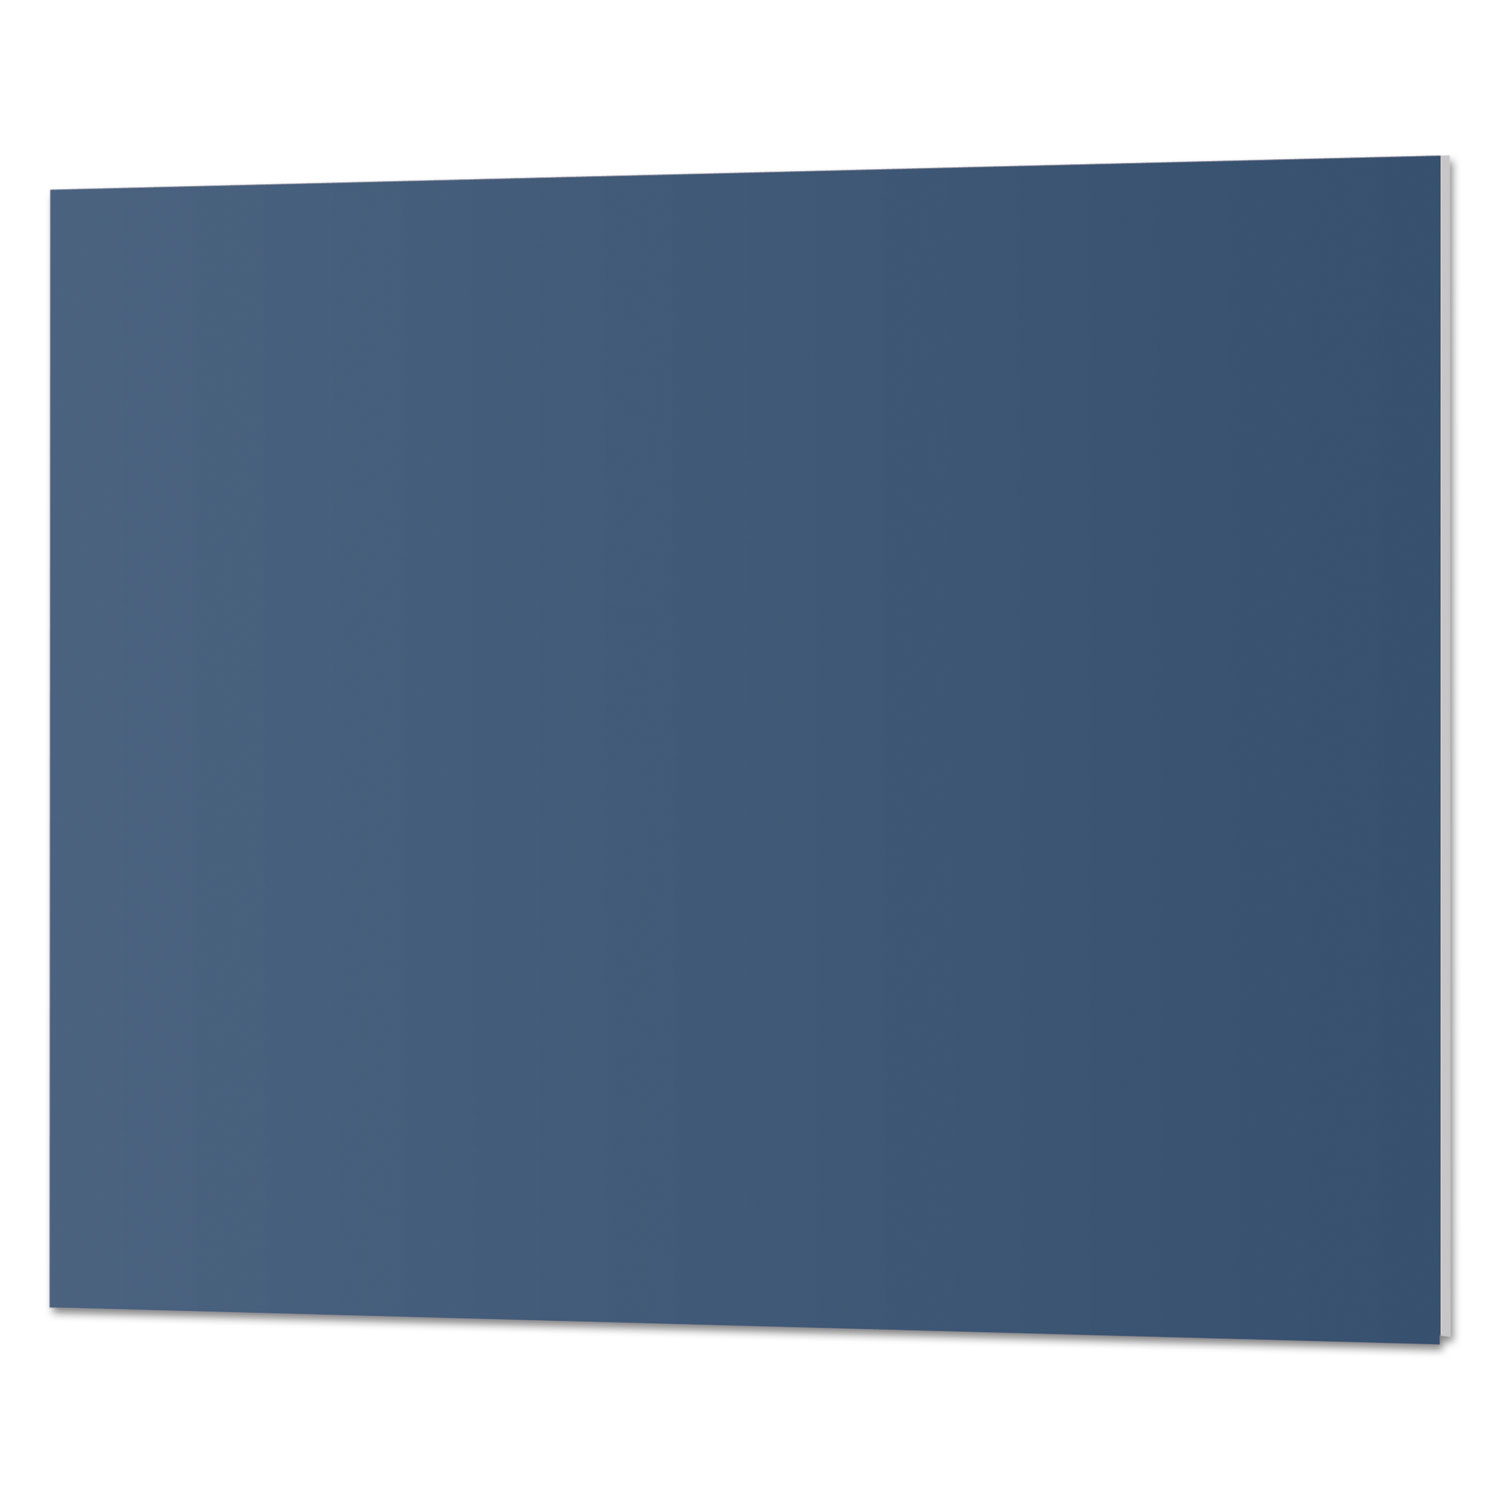 CFC-Free Polystyrene Foam Board, 30 x 20, Blue with White Core, 10/Carton